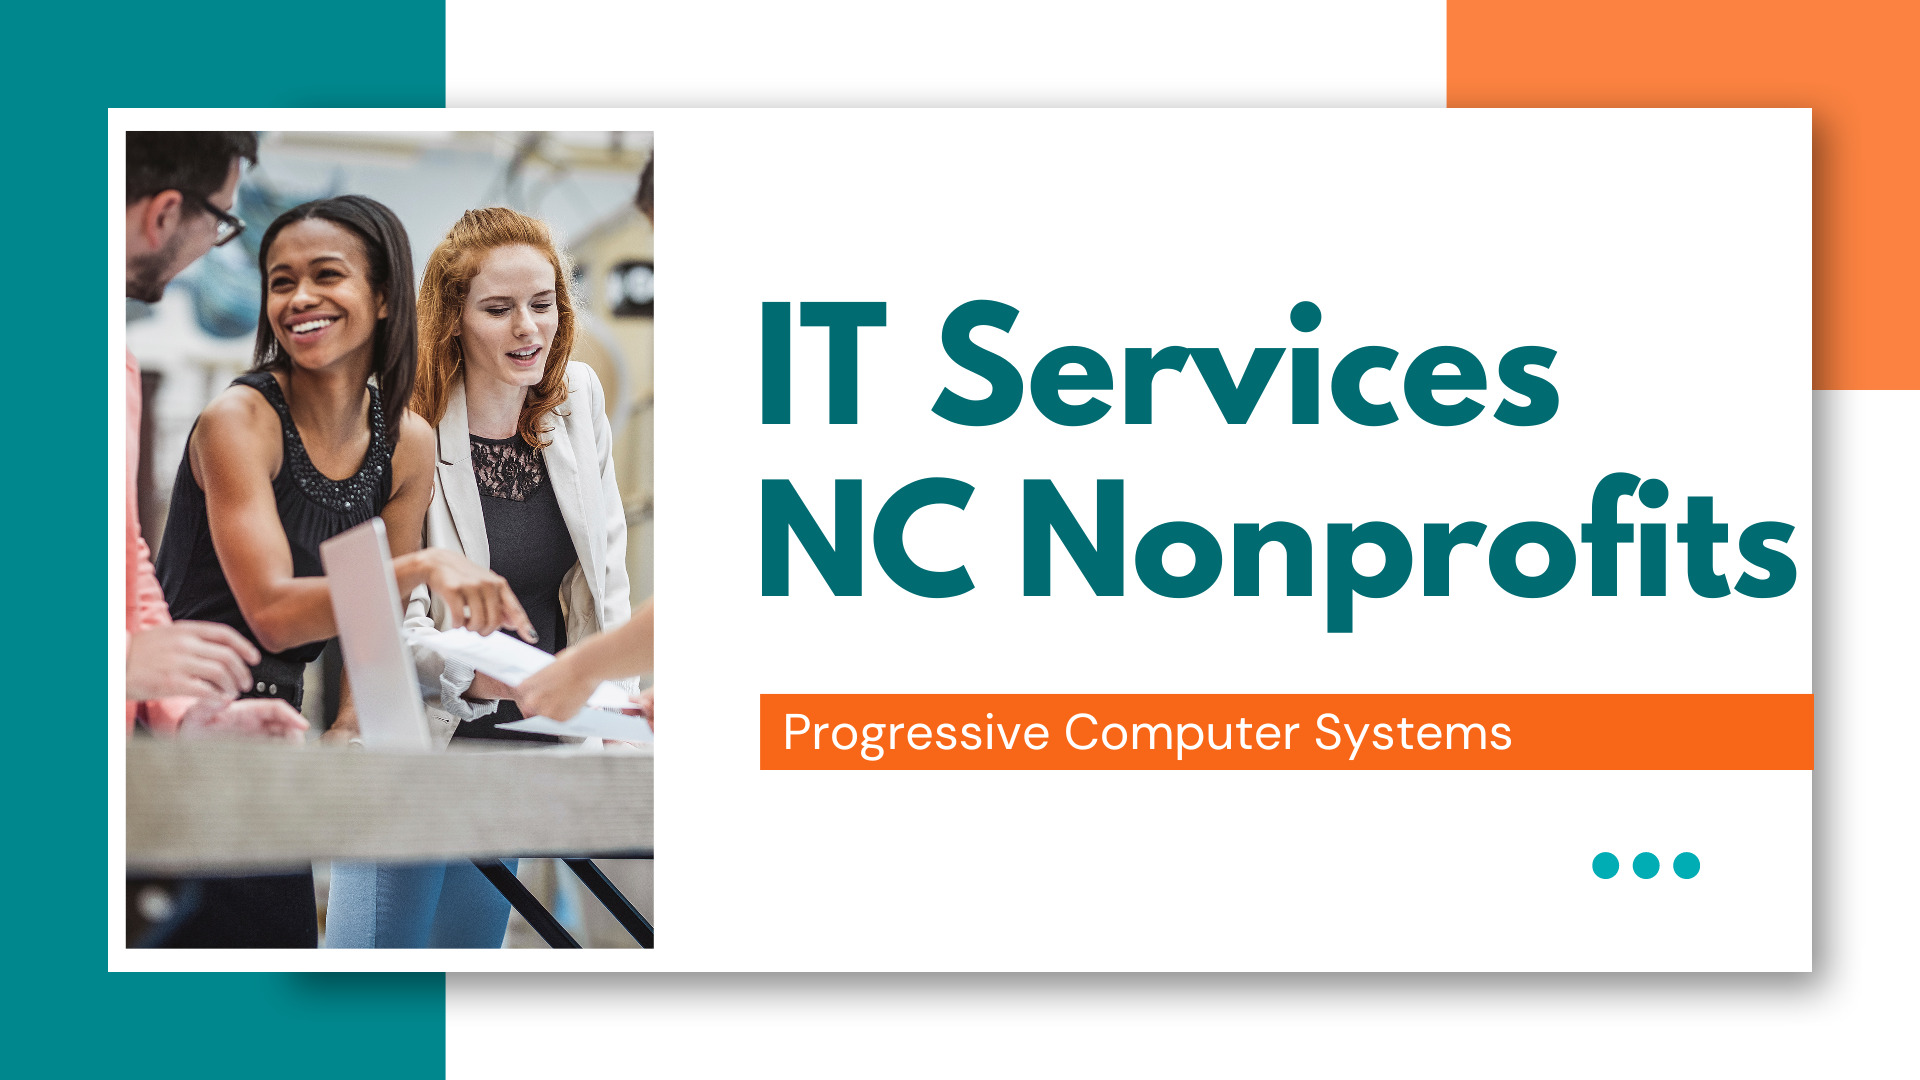 Nonprofit IT Services In North Carolina